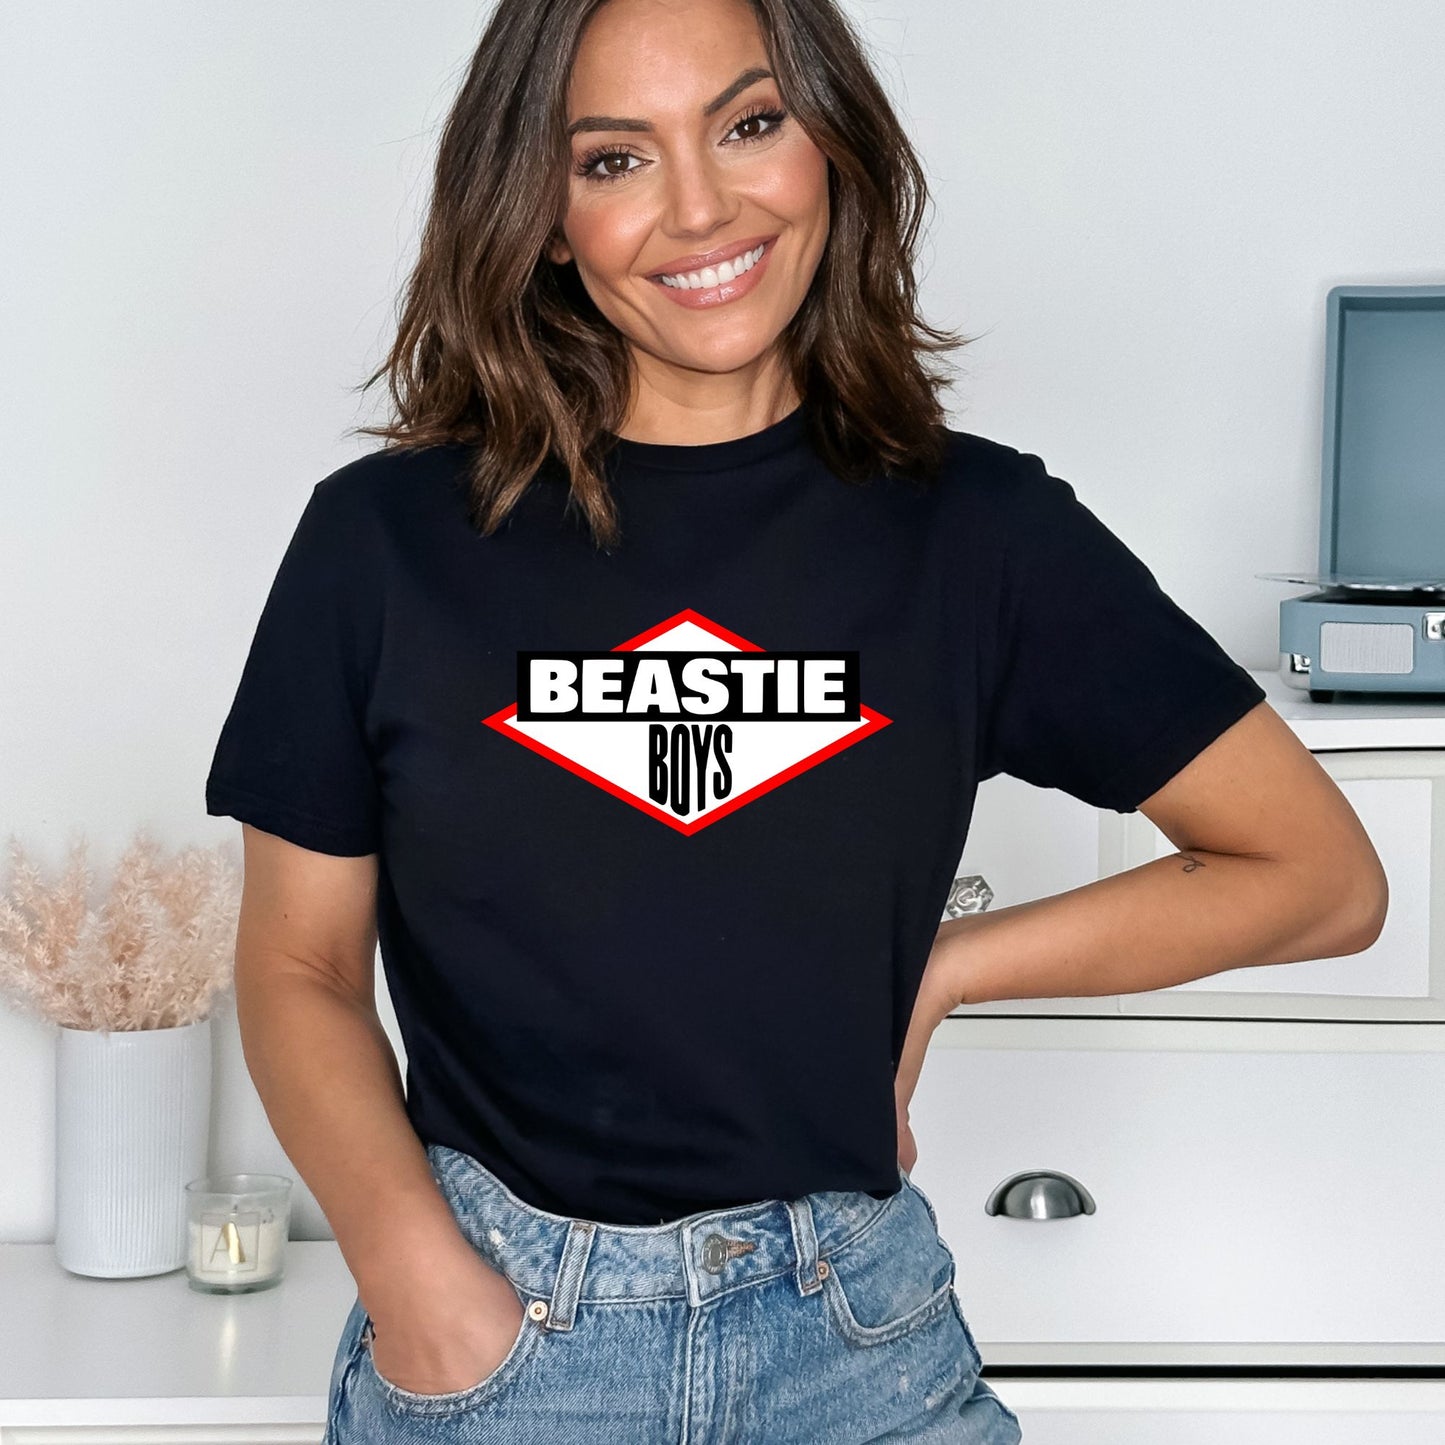 Camiseta unisex para adultos Beastie Boys 